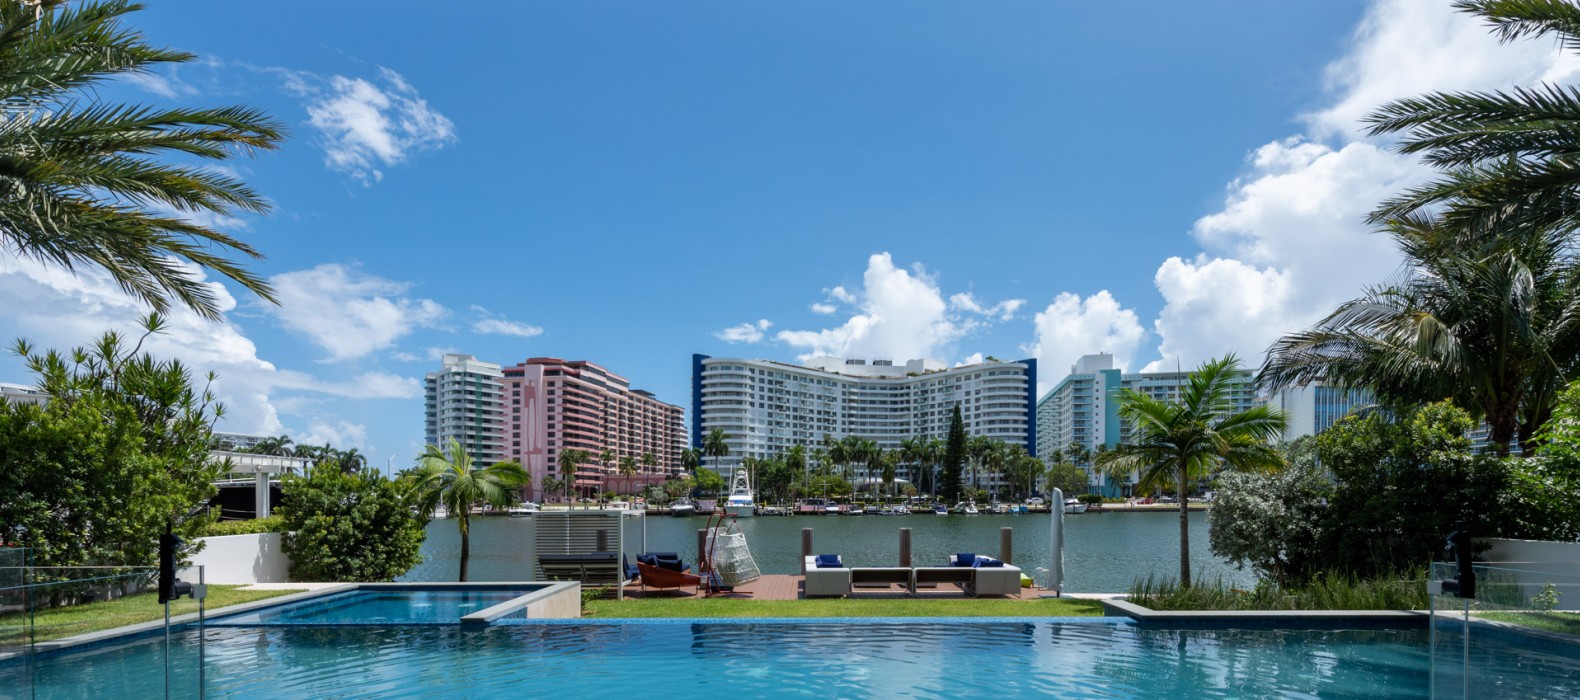 Exterior pool view of Villa Pamela in Miami